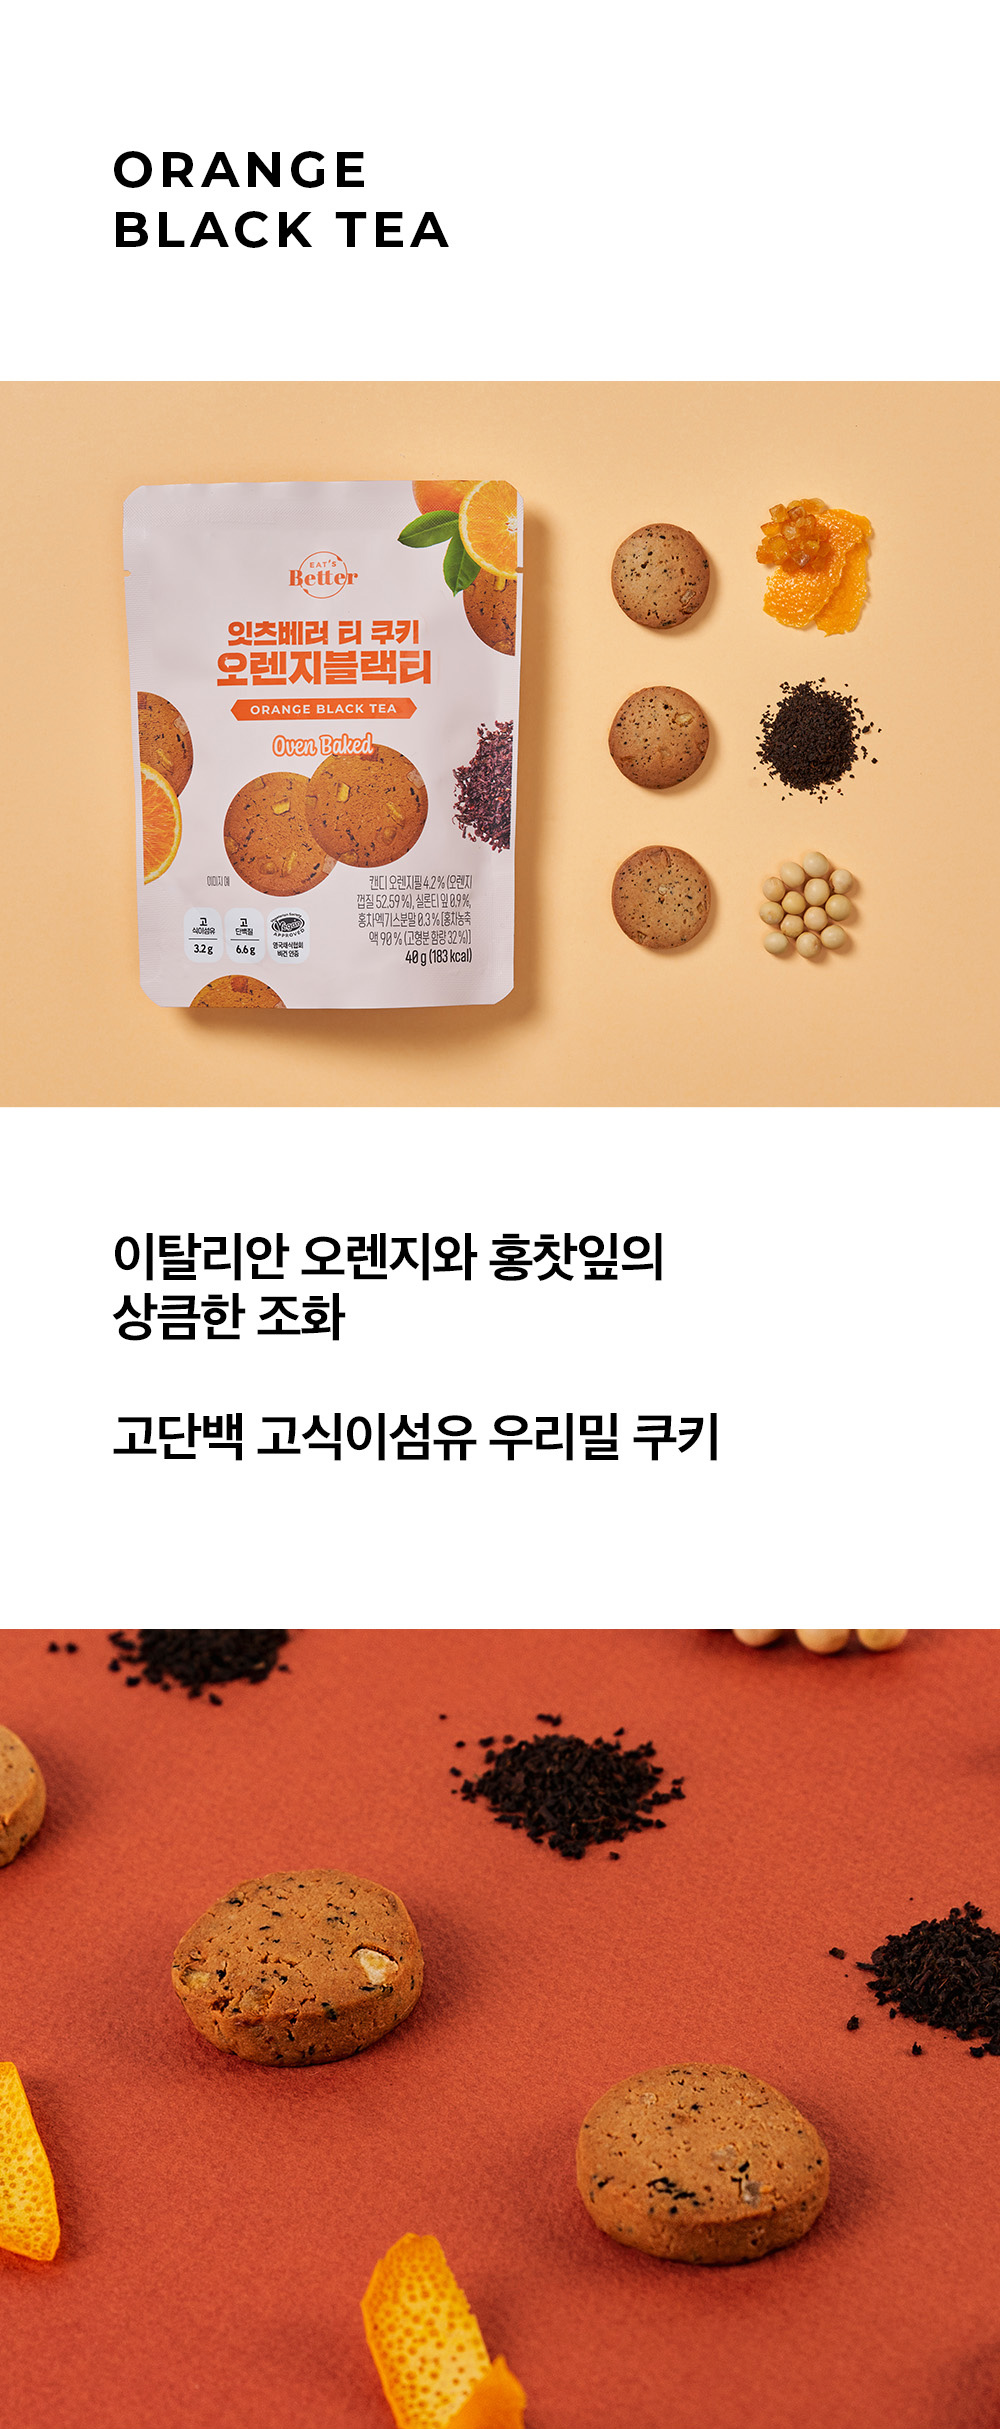 [ORANGE BLACK TEA]
이탈리안 오렌지와 홍찻잎의
상큼한 조화
고단백 고식이섬유 우리밀 쿠키